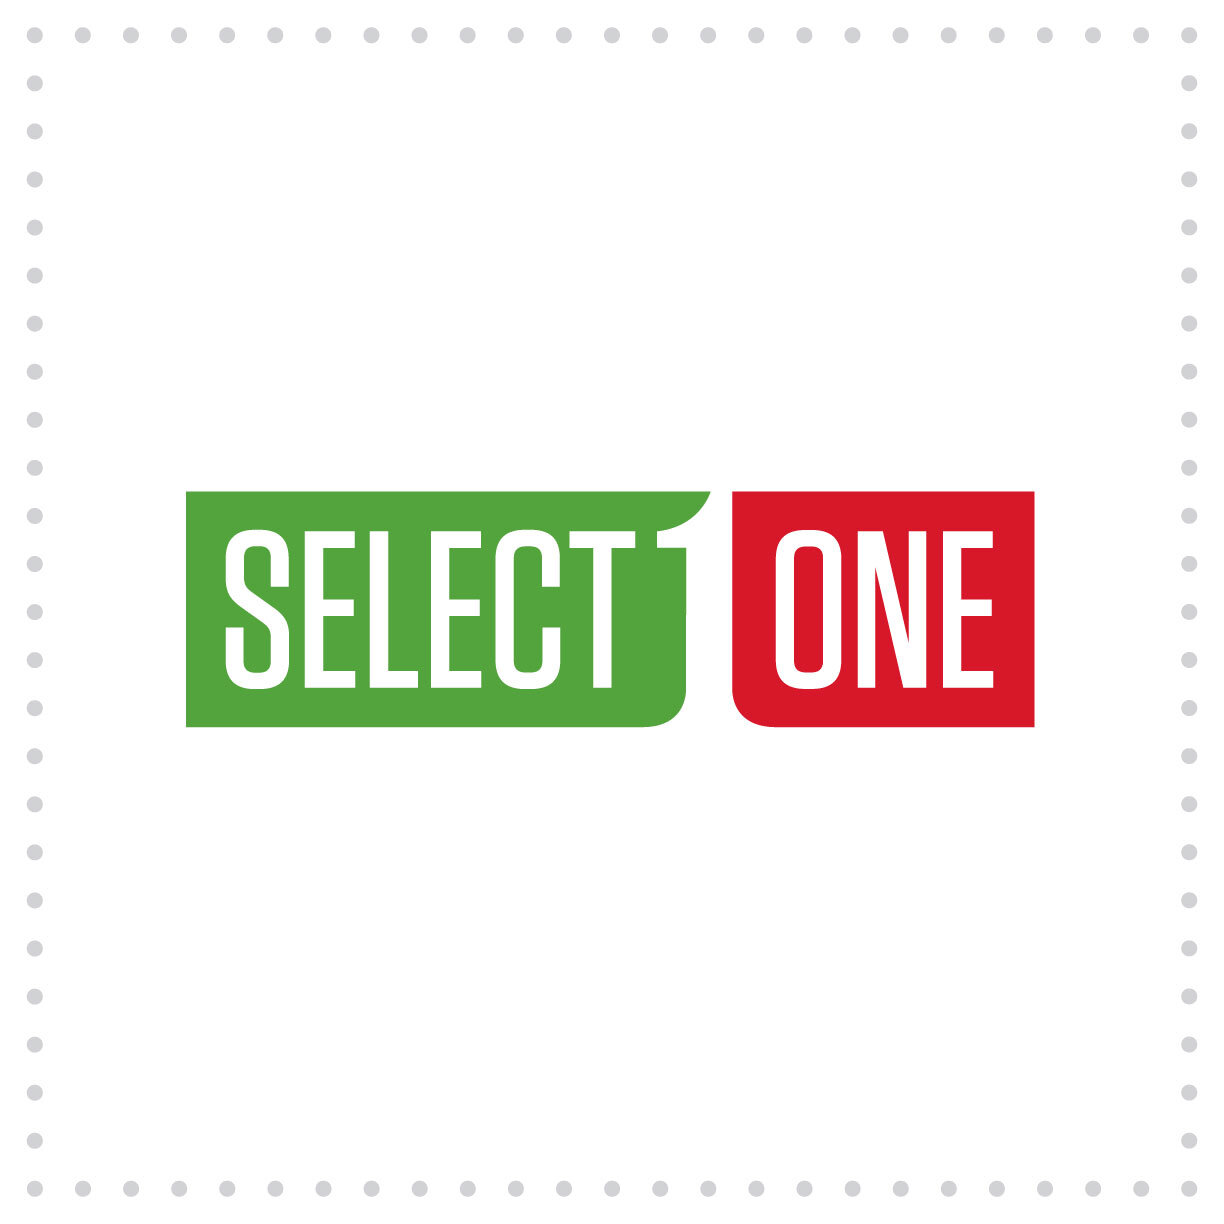 Ball-LogoDesign-SelectOne.jpg